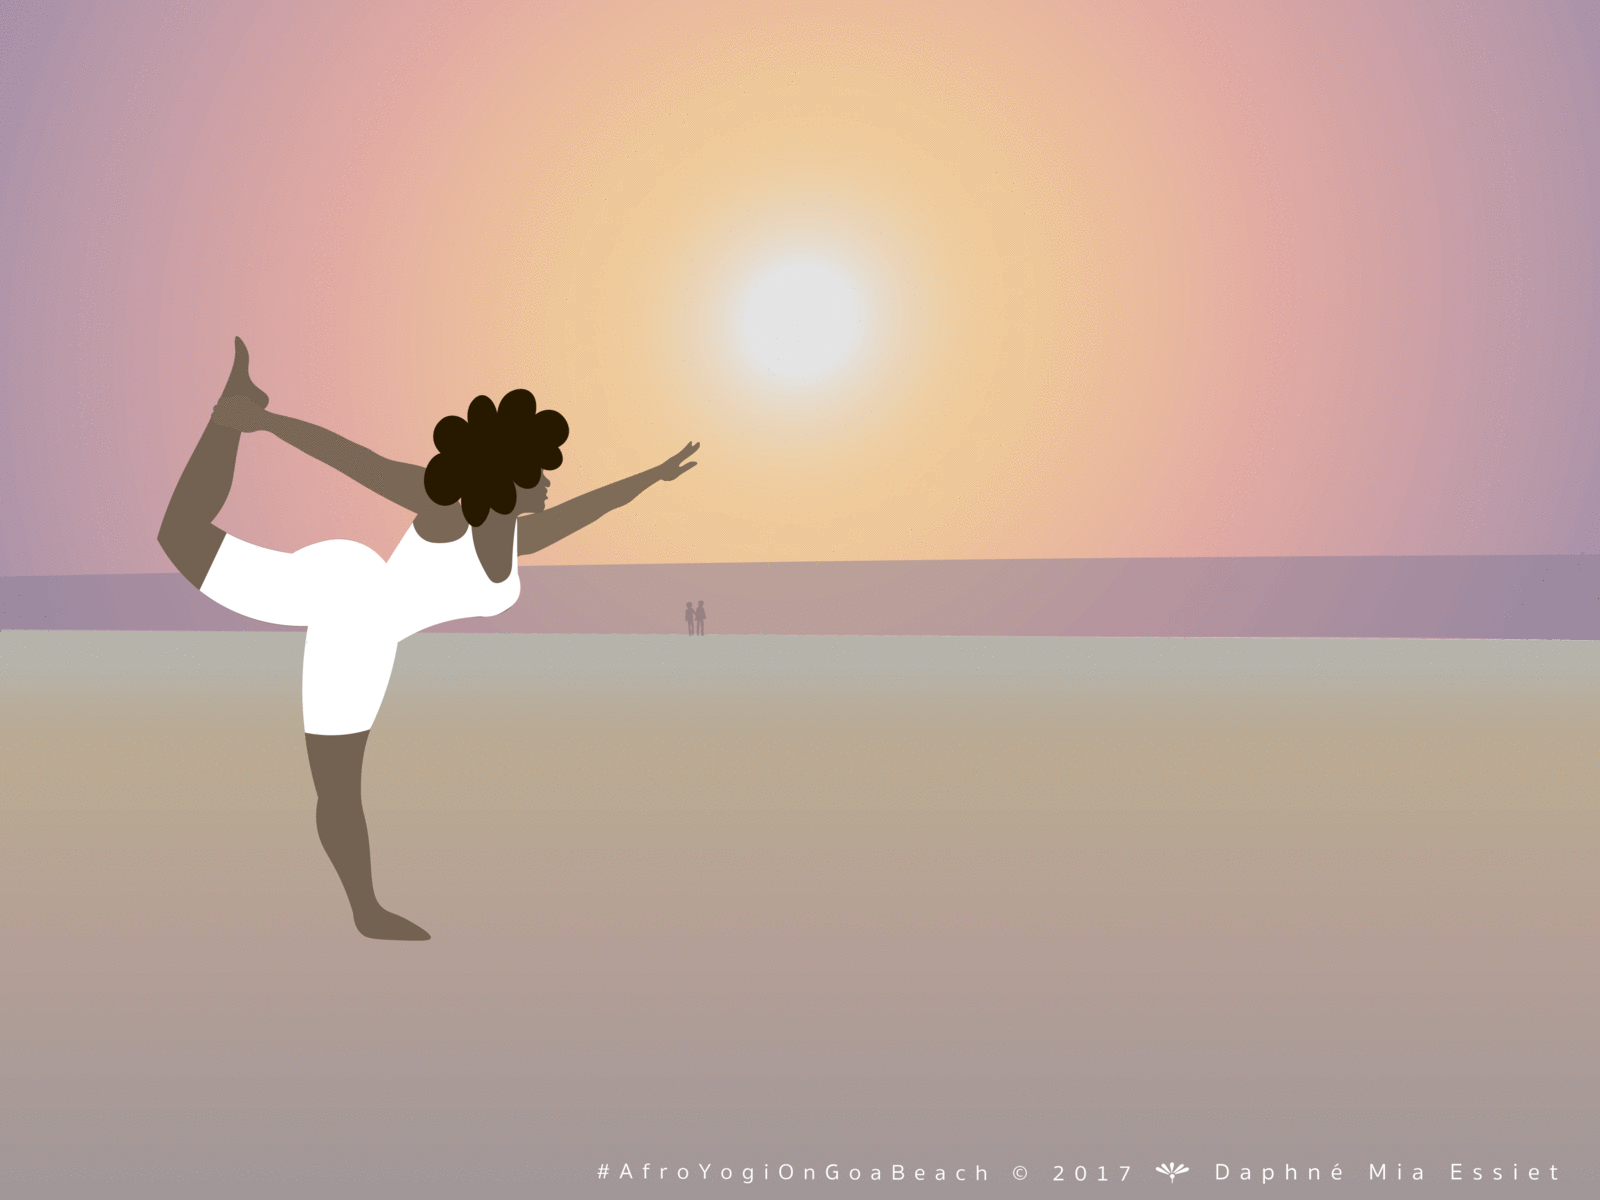 Yogi In Goa Beach Copy afro black woman illustration vector yoga pose